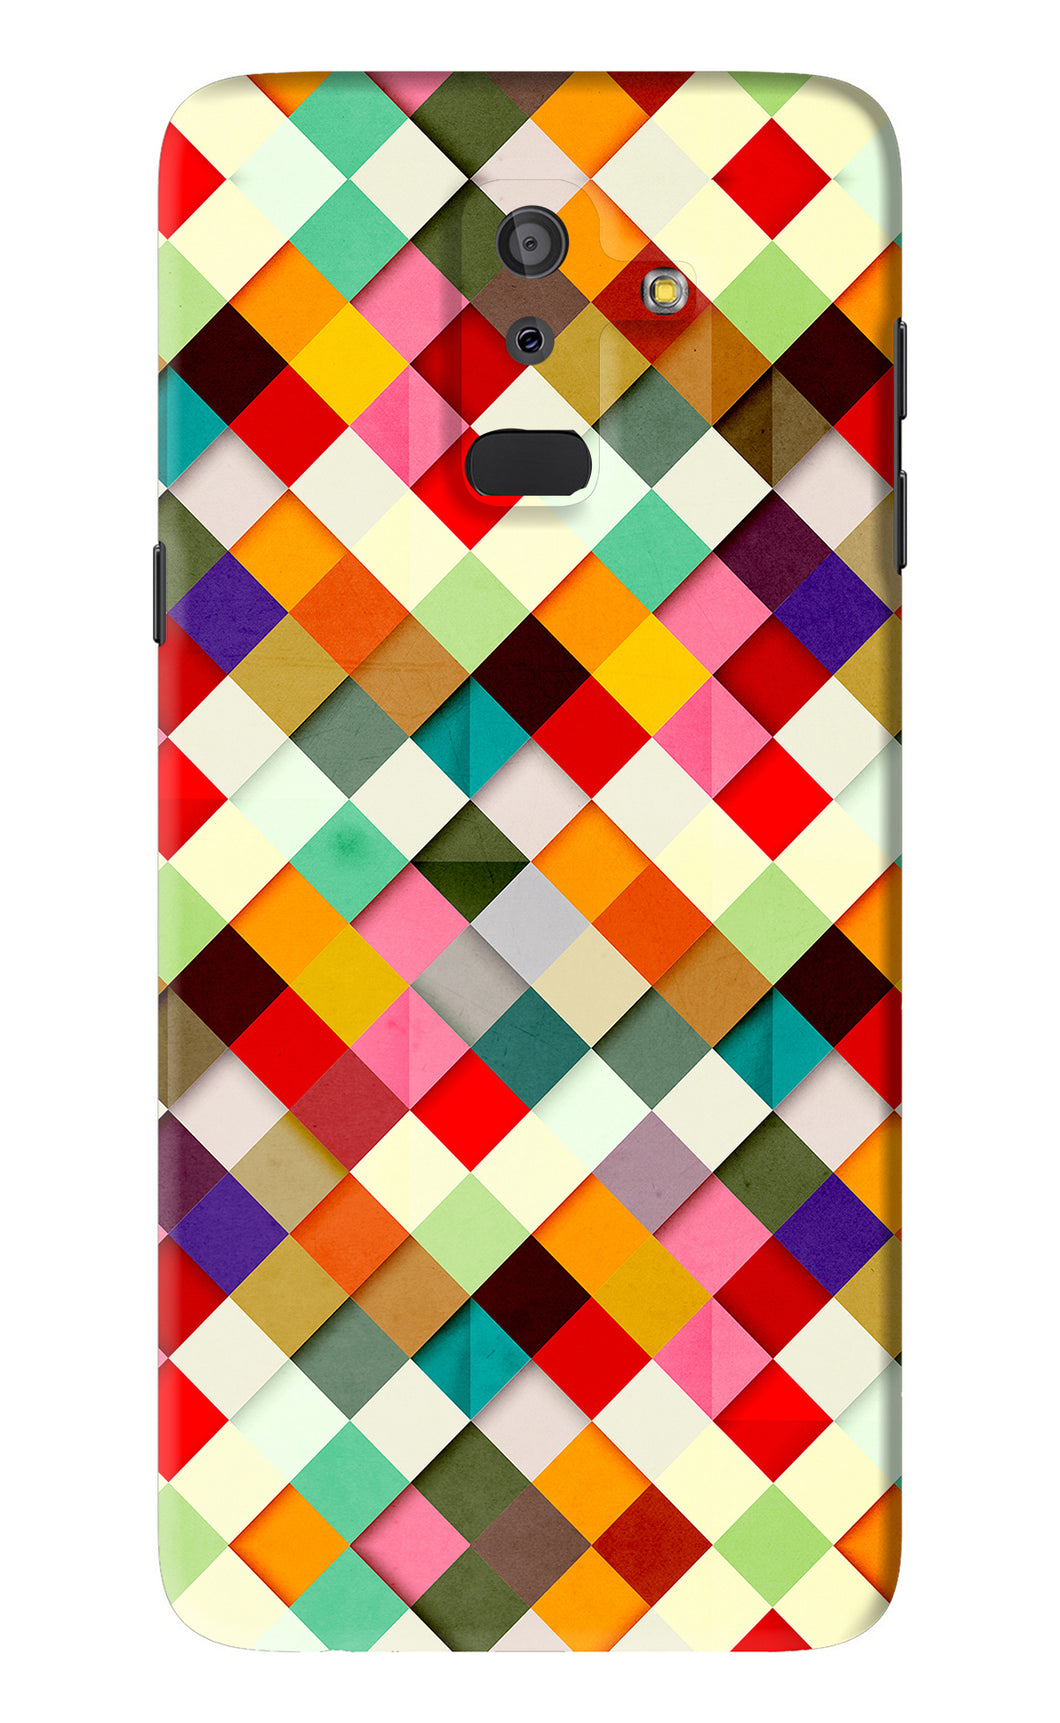 Geometric Abstract Colorful Samsung Galaxy J8 2018 Back Skin Wrap